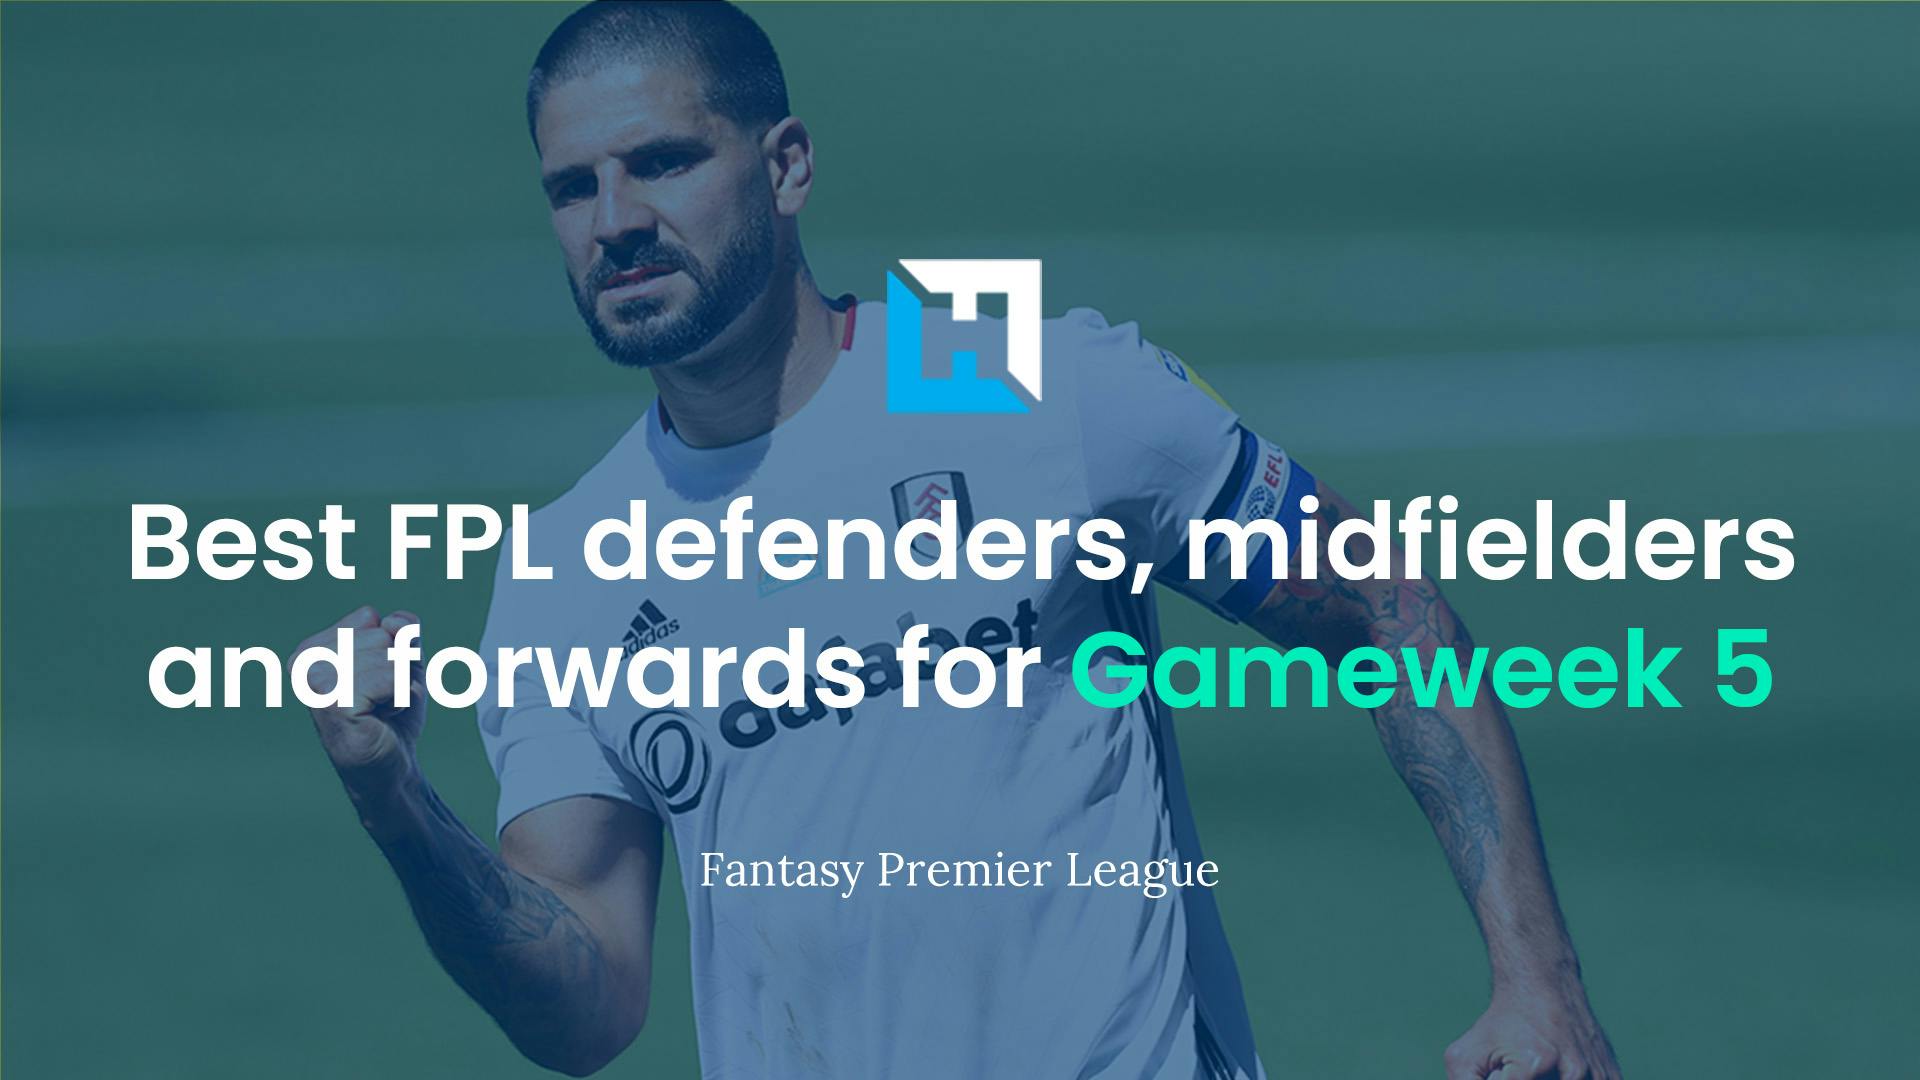 Best FPL players for Gameweek 5: Best defenders, midfielders and forwards